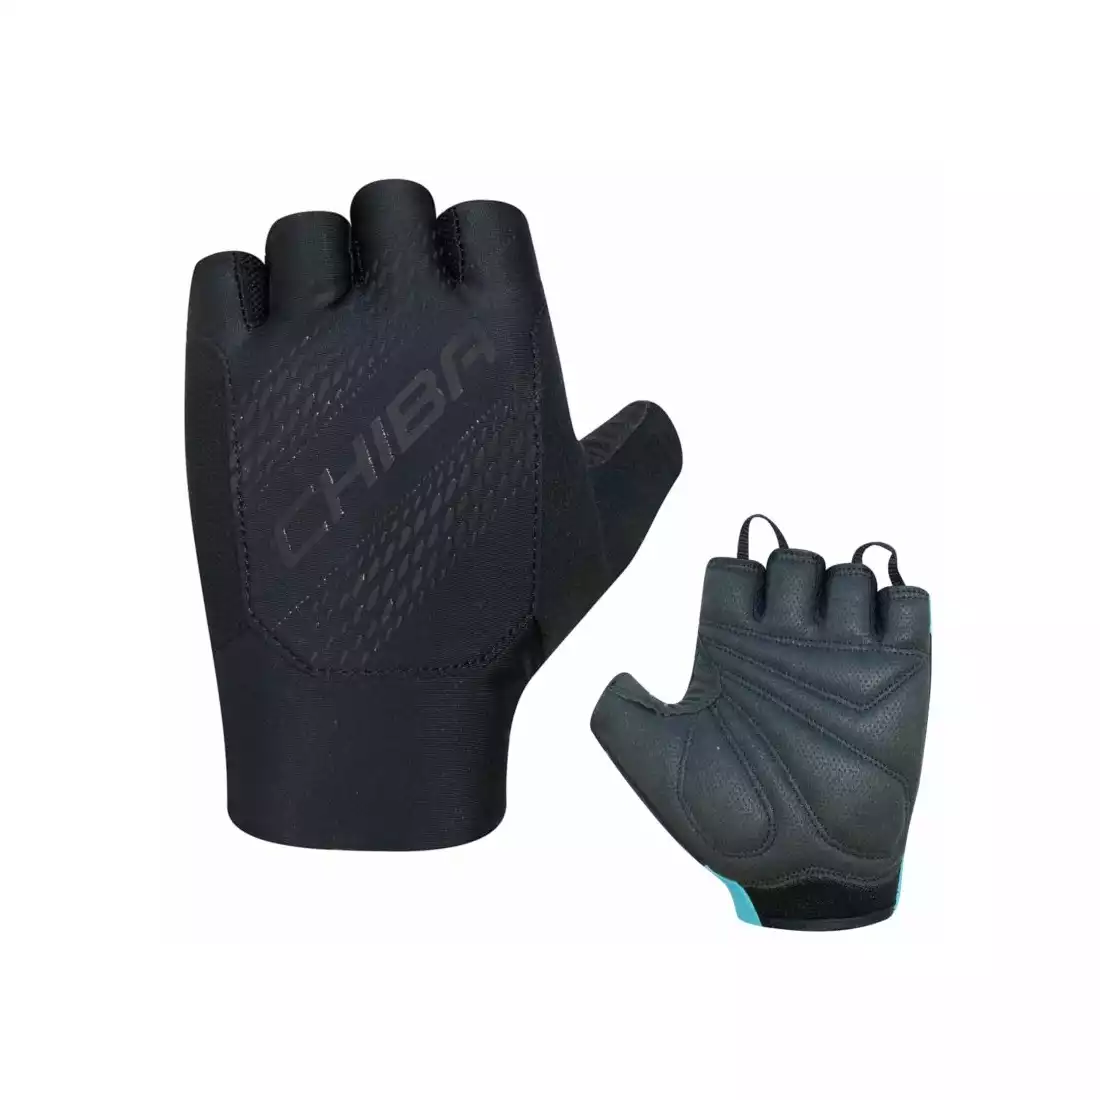 CHIBA CHINOOK Bicycle gloves, black